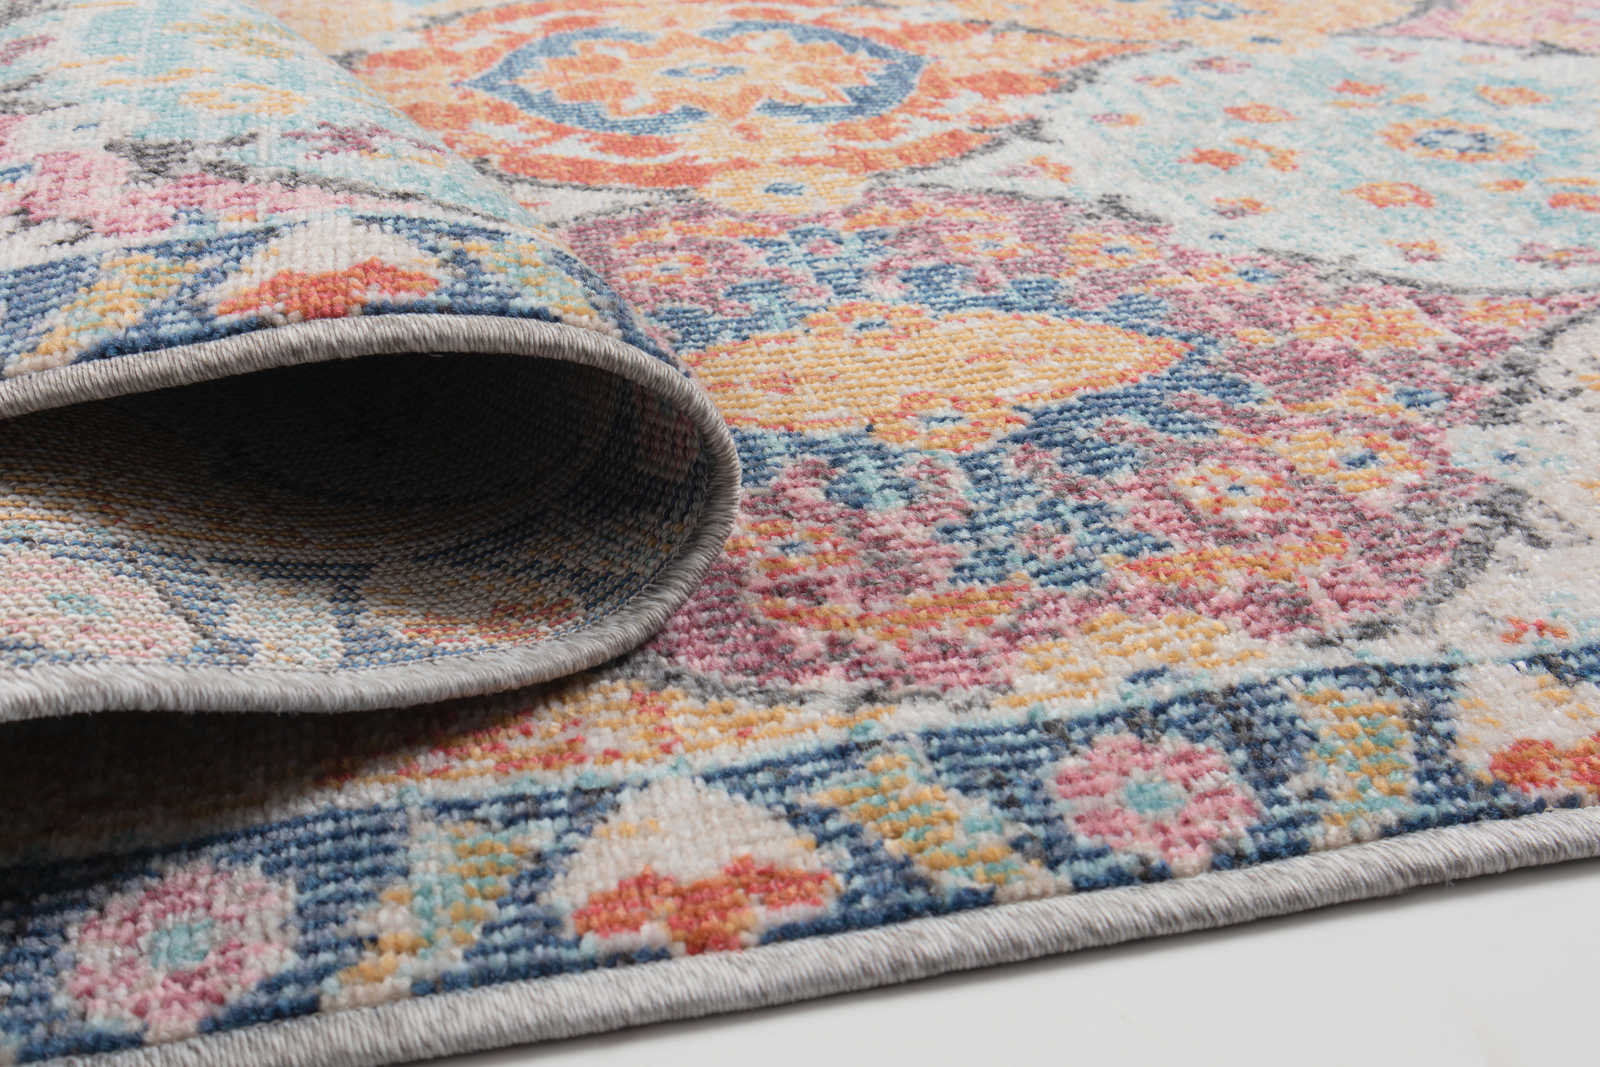             Bunter Outdoor Teppich aus Flachgewebe – 230 x 160 cm
        